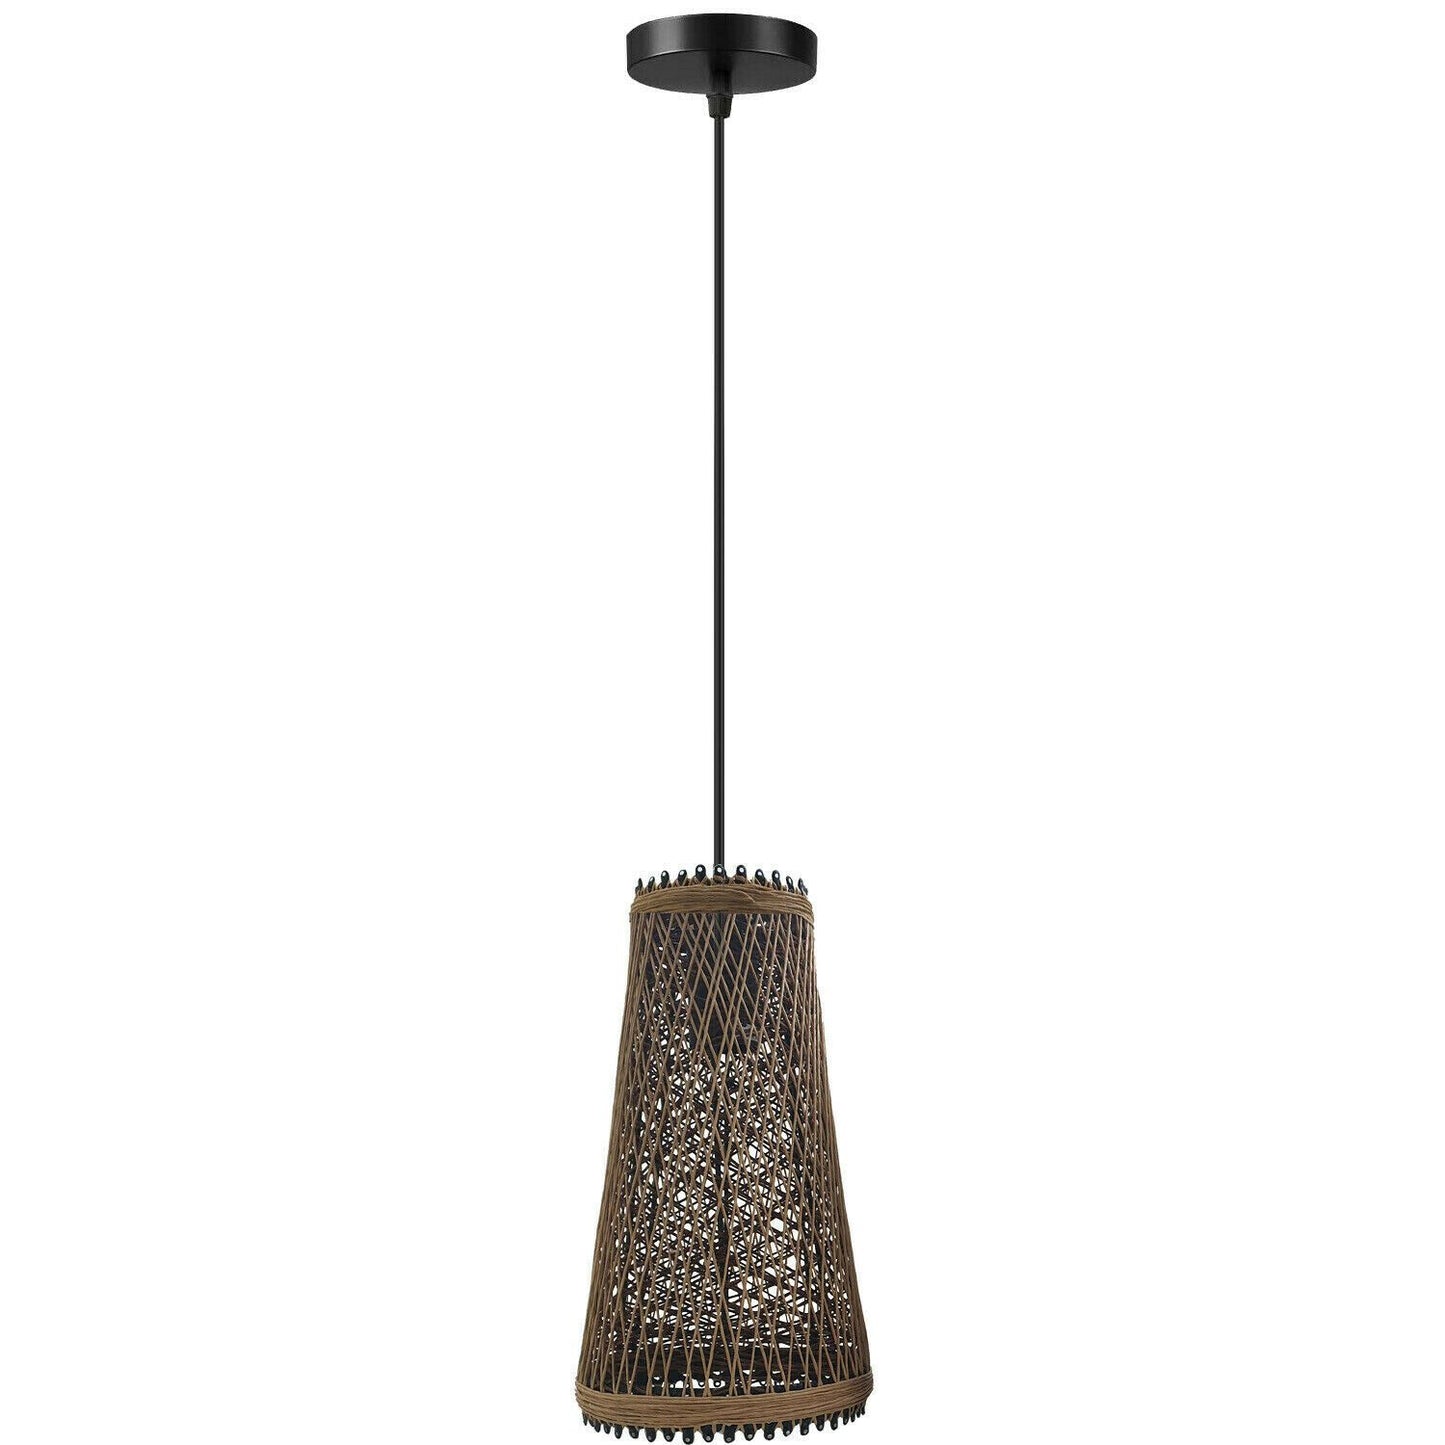 Modern Wicker Rattan Basket Style Ceiling Pendant Hanging Lights